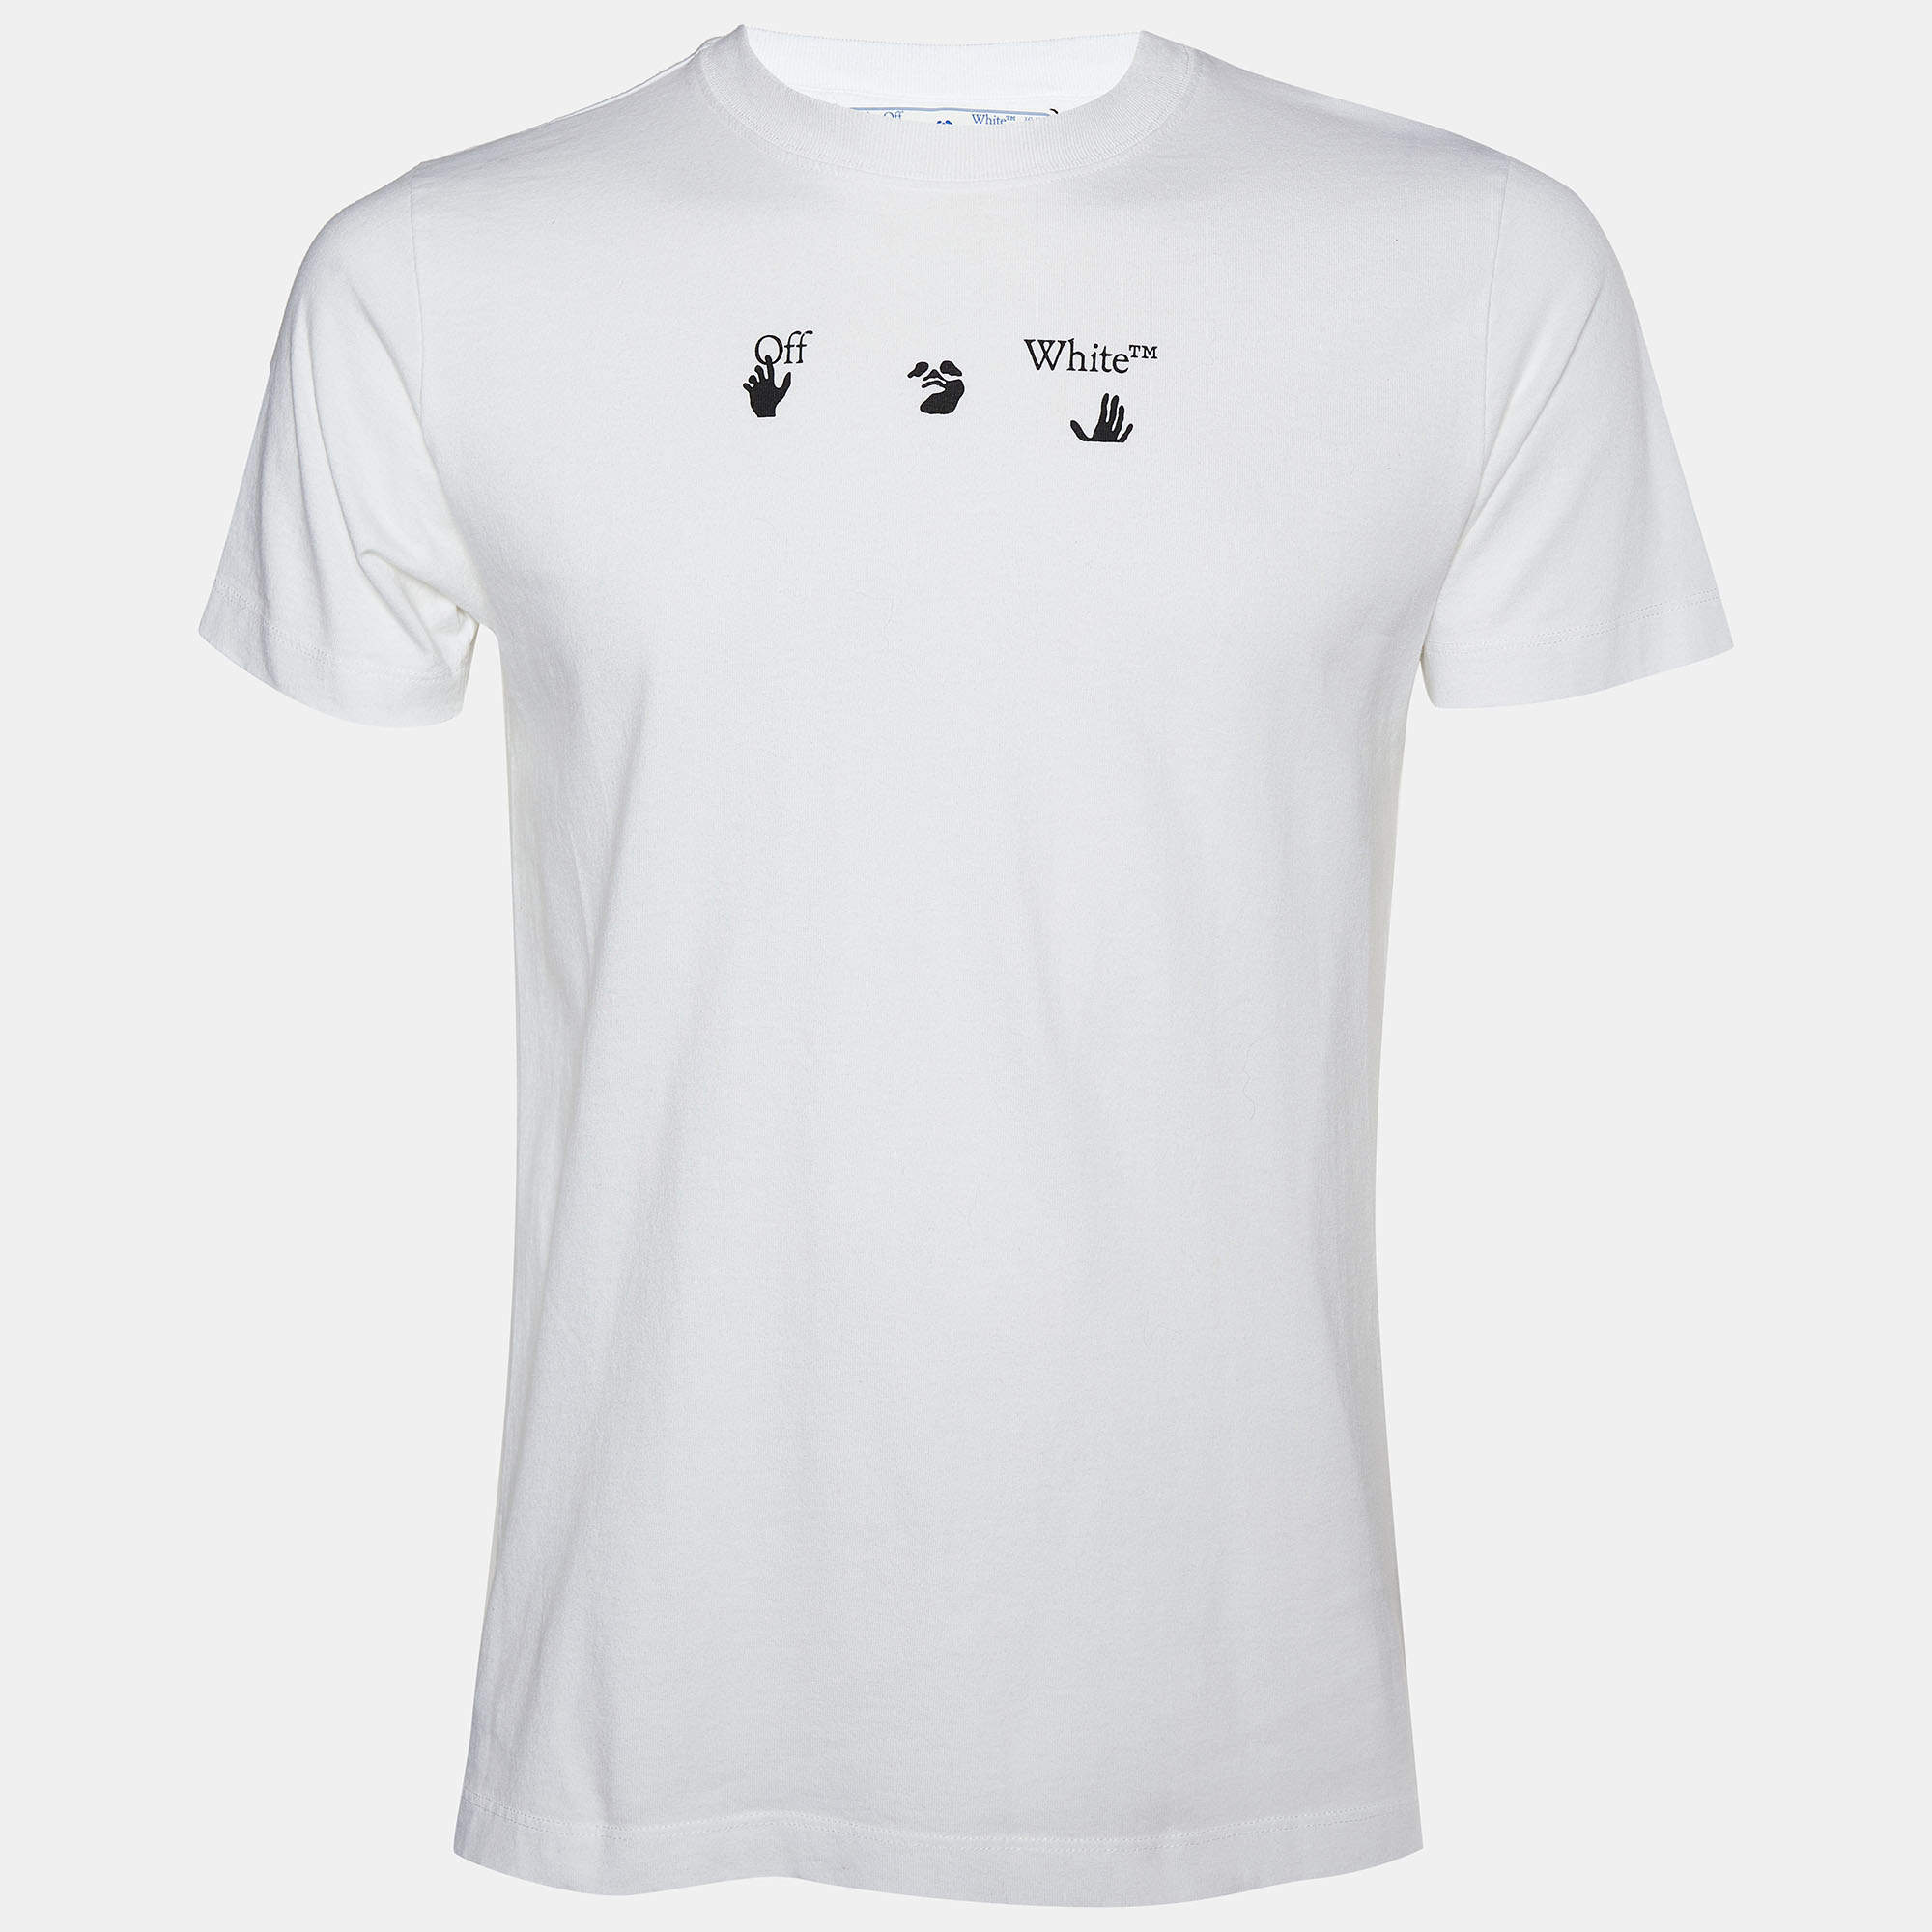 Off White White Inkblot Logo Printed Cotton Crewneck T-Shirt S